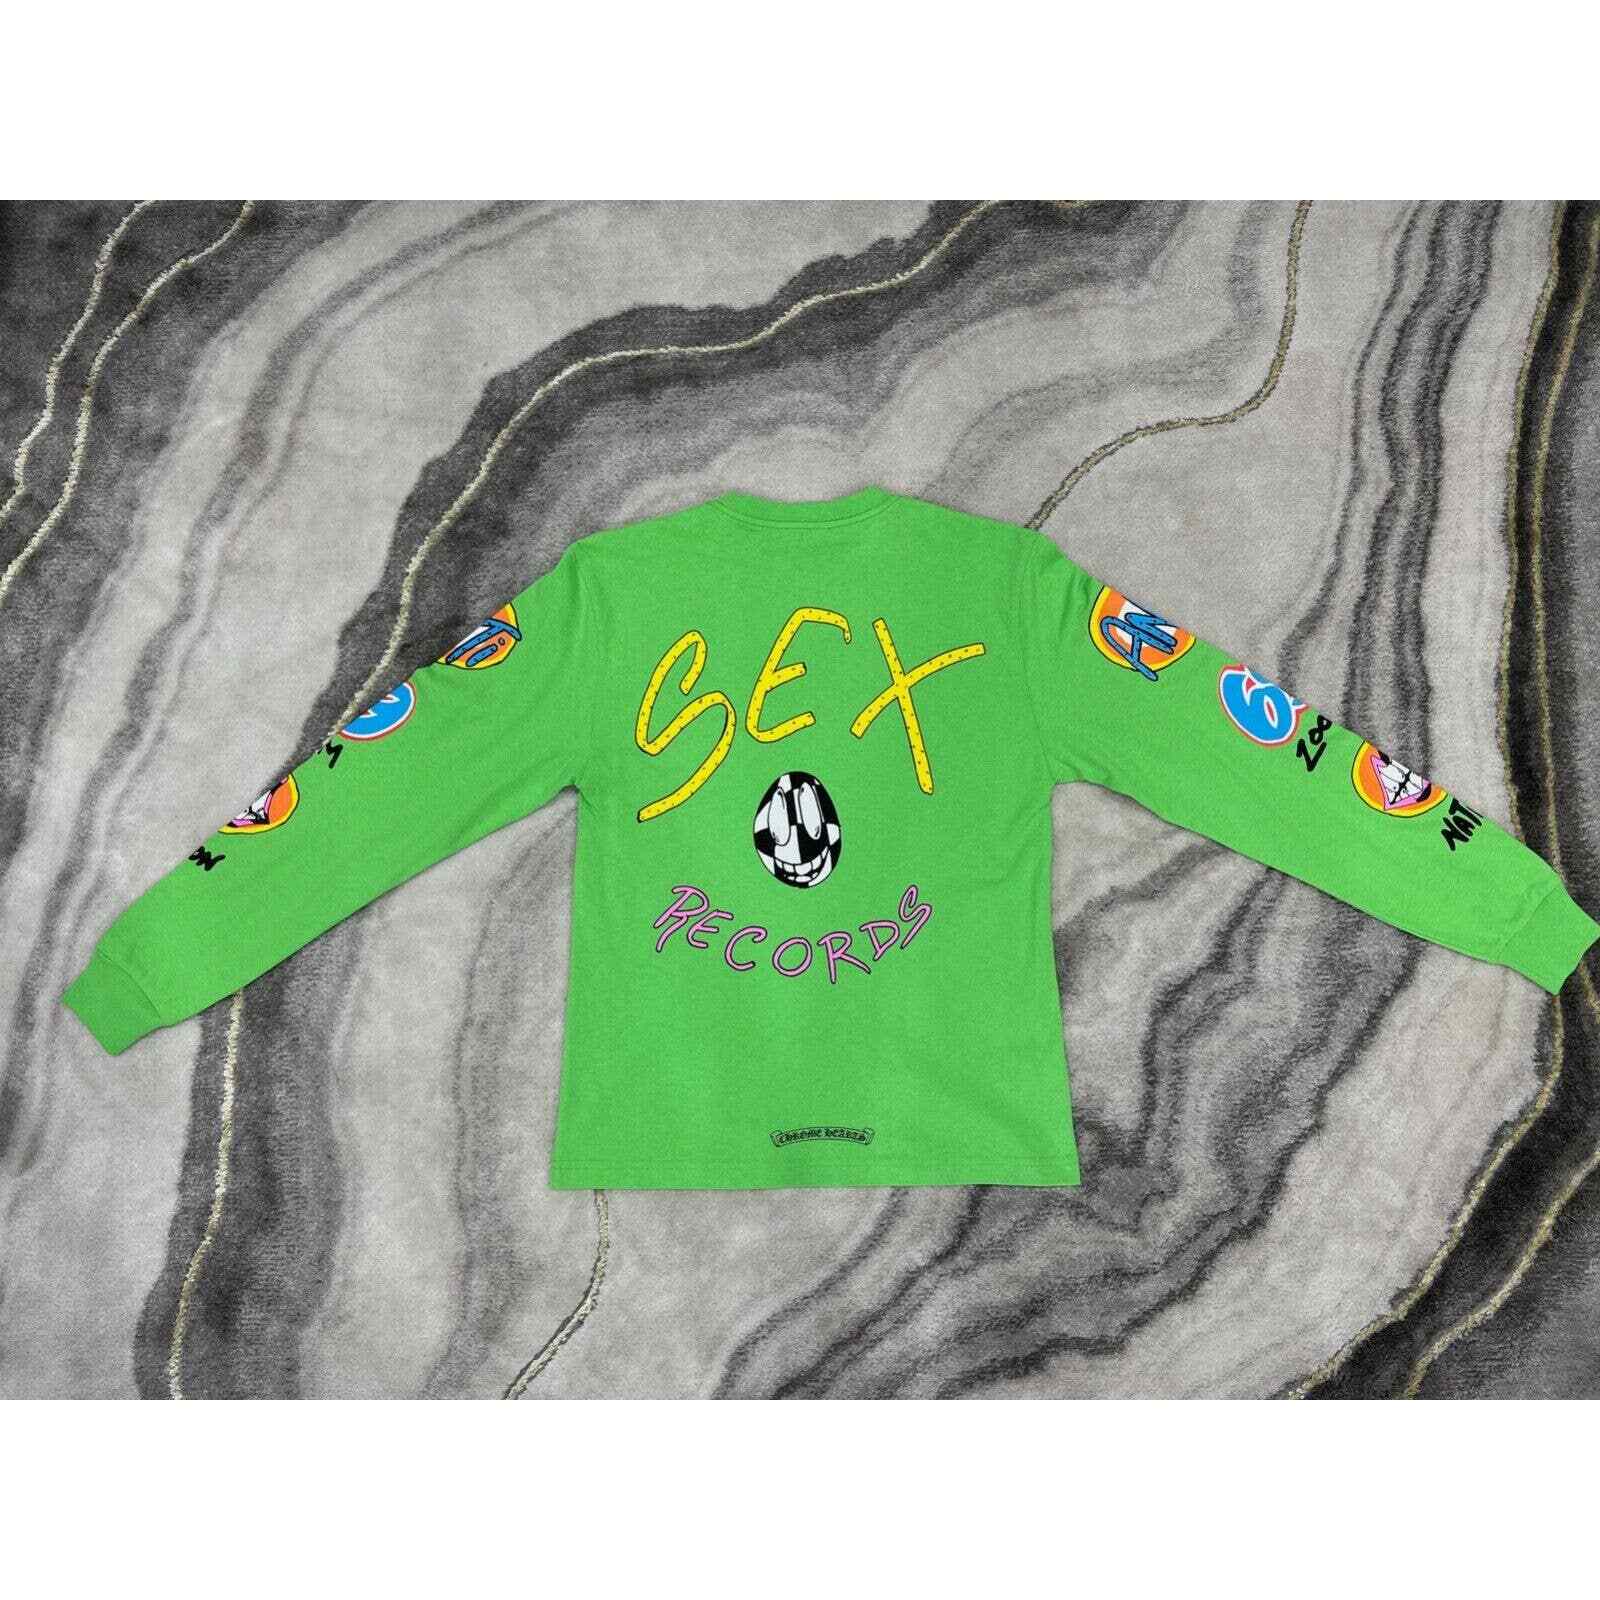 Chrome Hearts Matty Boy Sex Records 69 Green Citrus T-shirt Long Sleeve  Small S